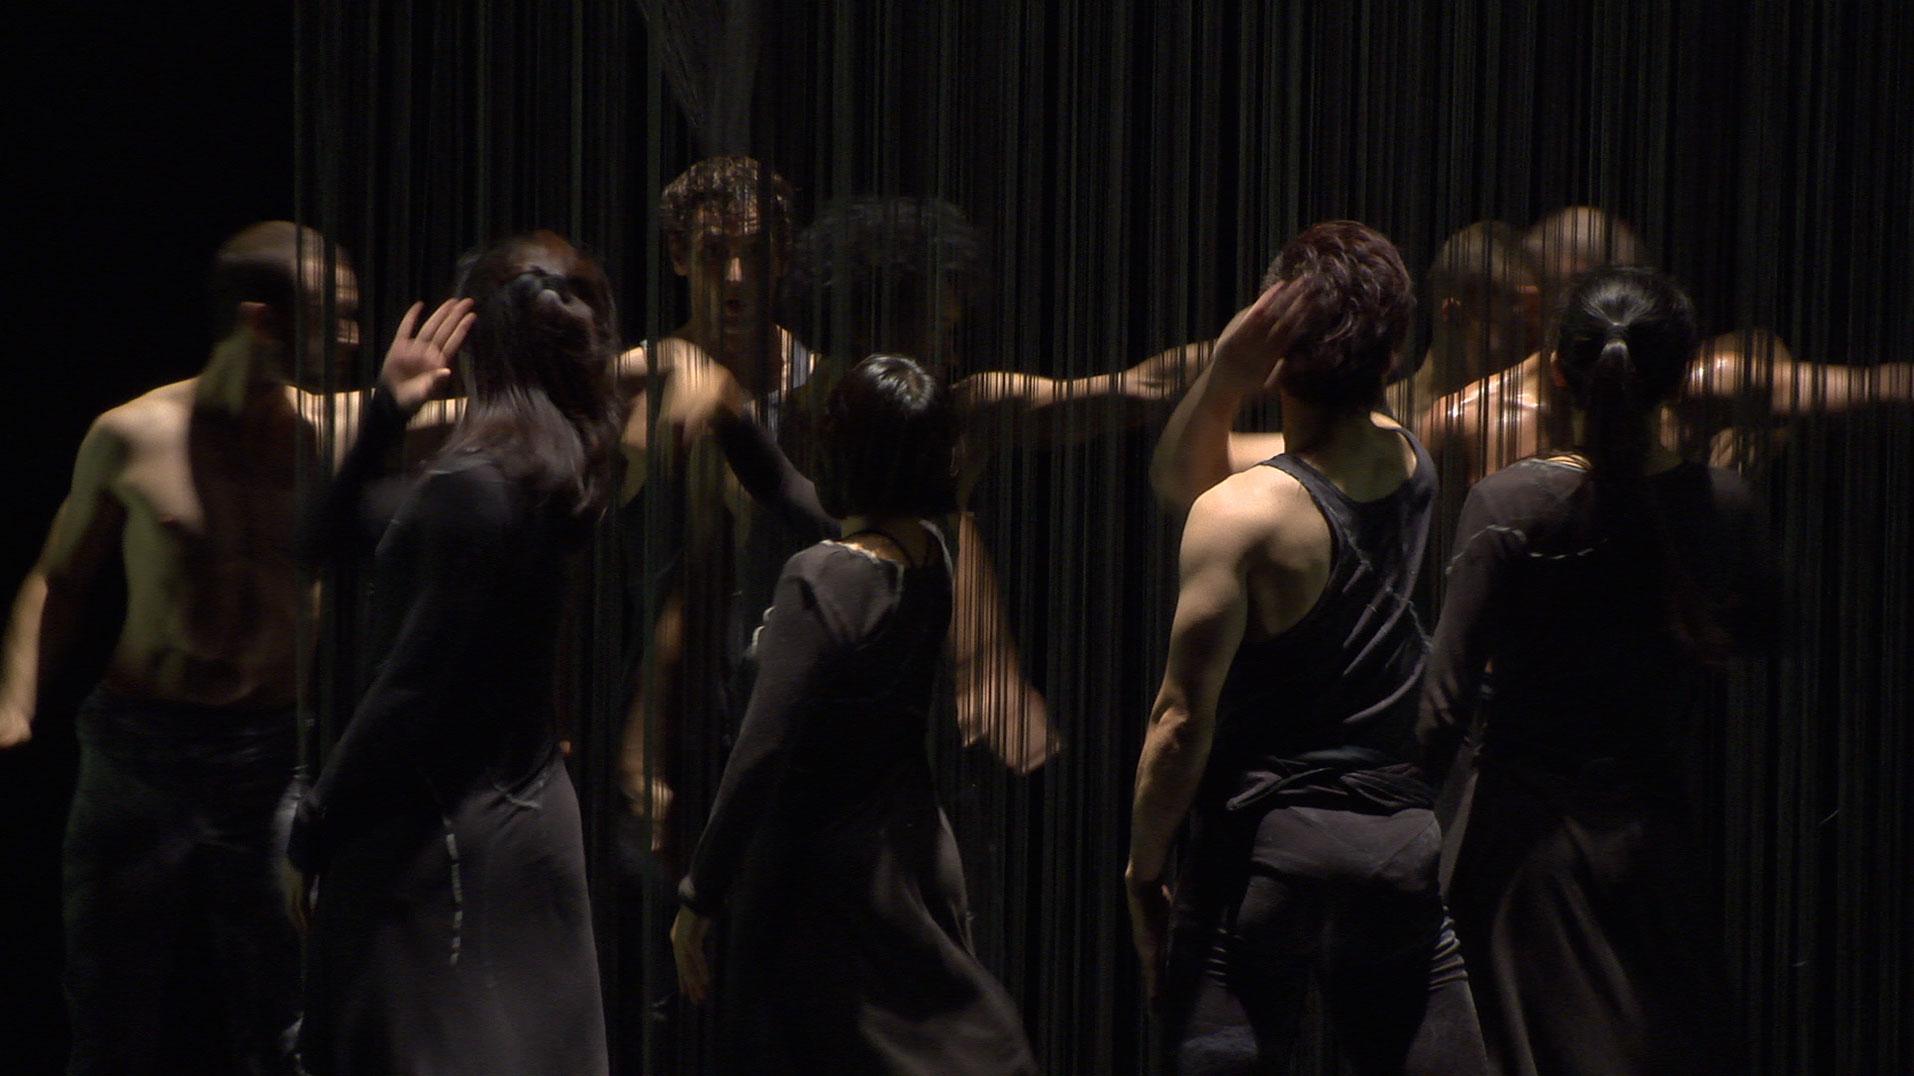 75a aus Stuttgart schneidet den Company-Trailer für das Colours International Dance Festival 2015 presented by Eric Gauthier